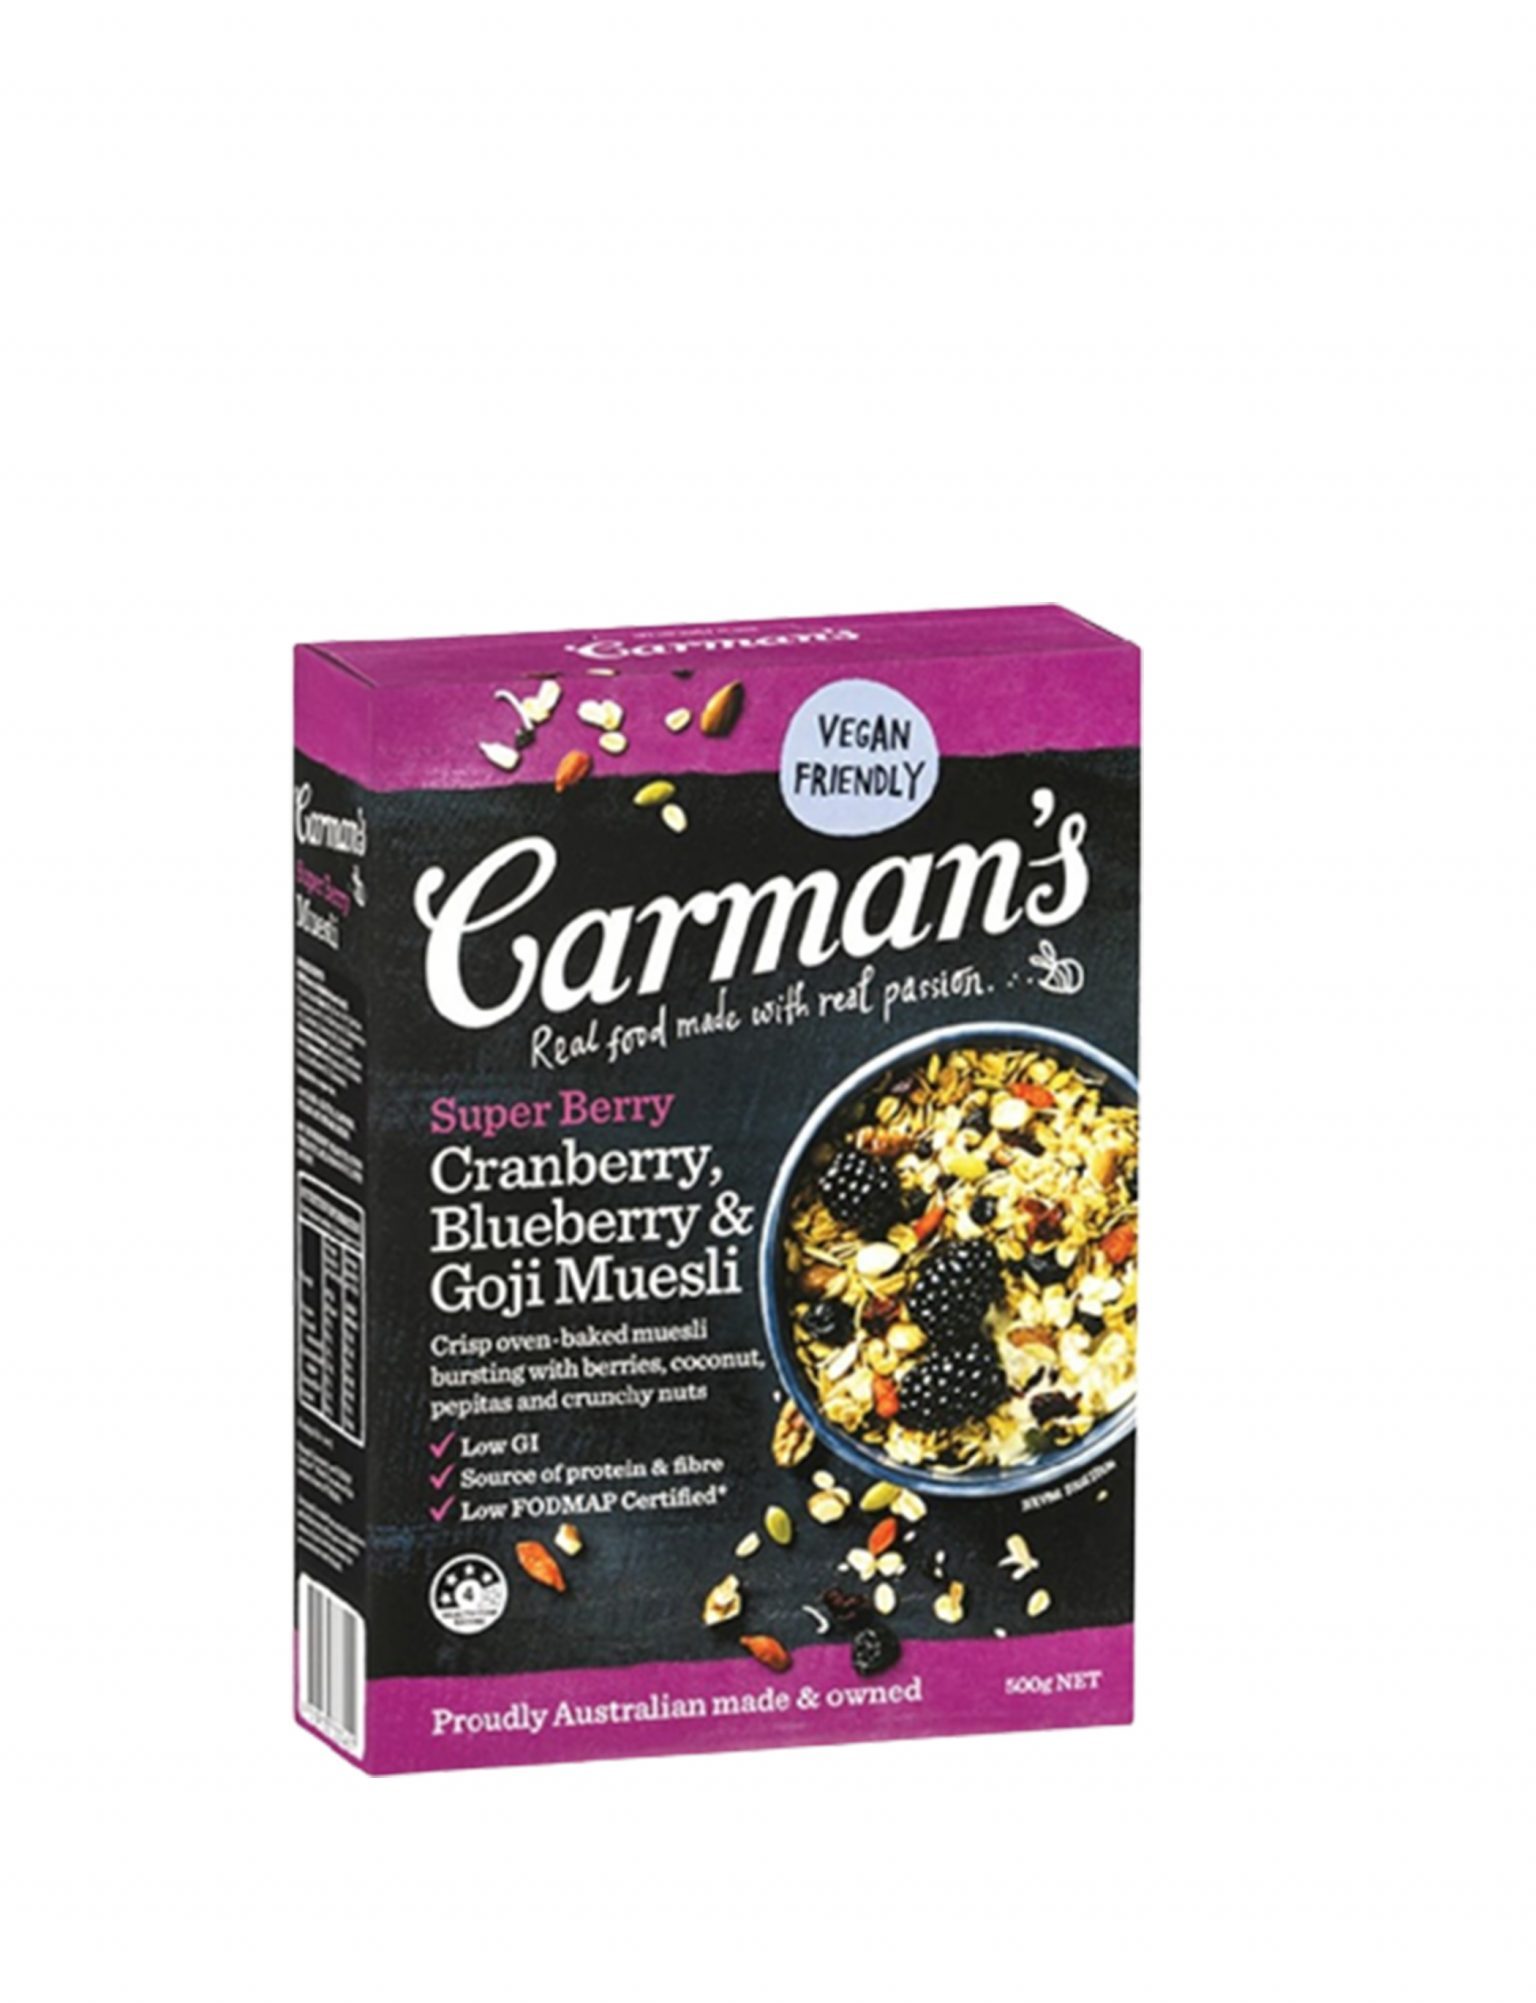 Carman's Cranberry,Blueberry & Goji Muesli main image